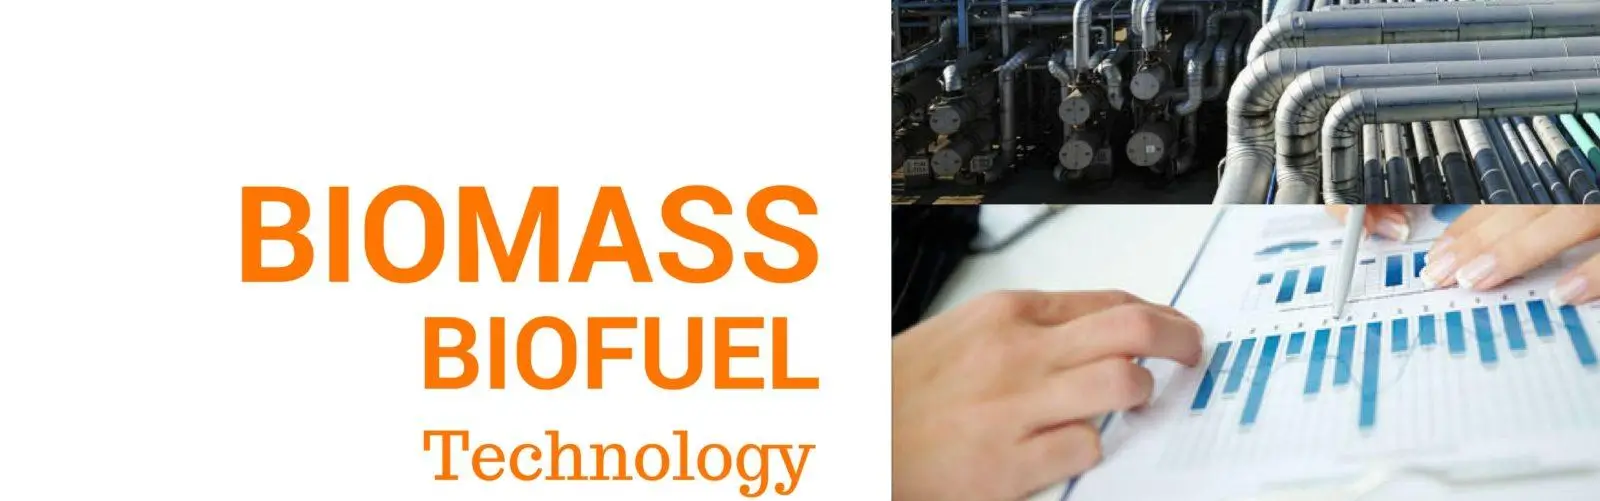 Biomass to Biofuel